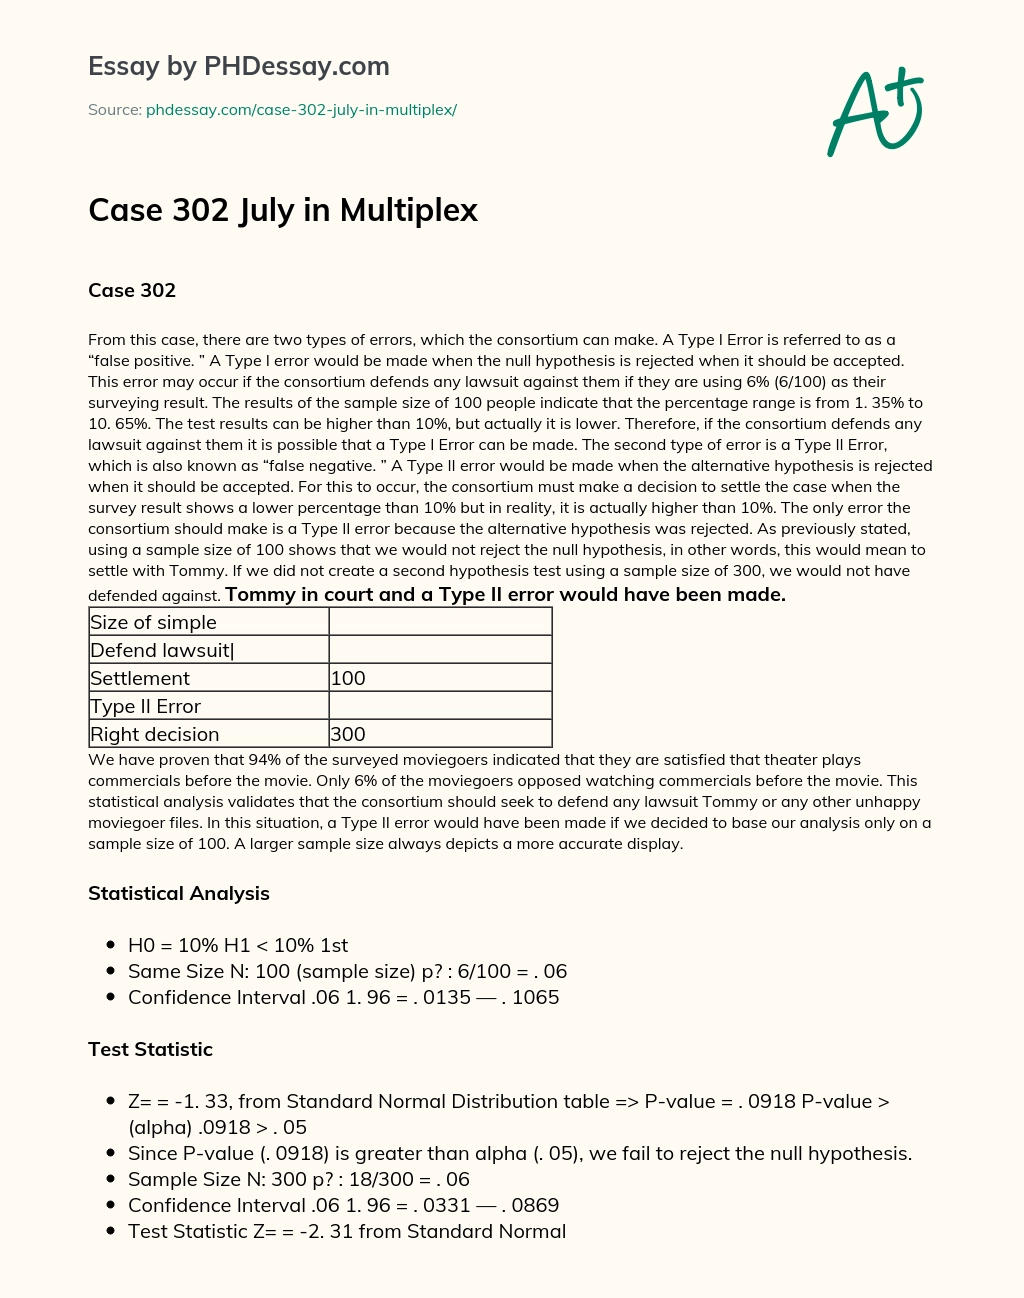 Case 302 July in Multiplex essay